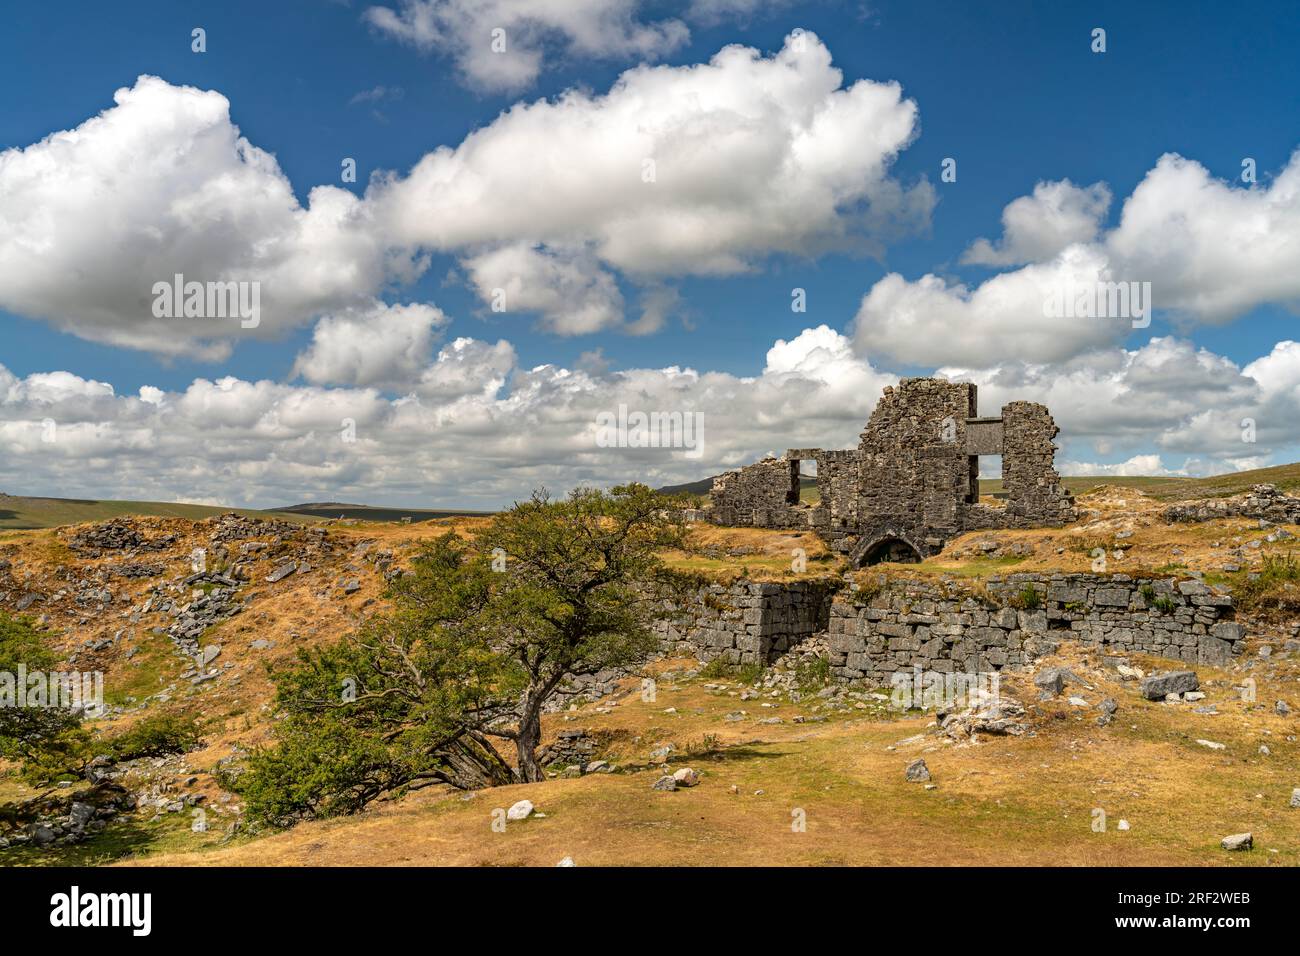 Ruine im Dartmoor, Devon, England, Großbritannien, Europa | Dartmoor Landschaft with Ruin, Devon, England, Vereinigtes Königreich Großbritannien, Europa Stockfoto